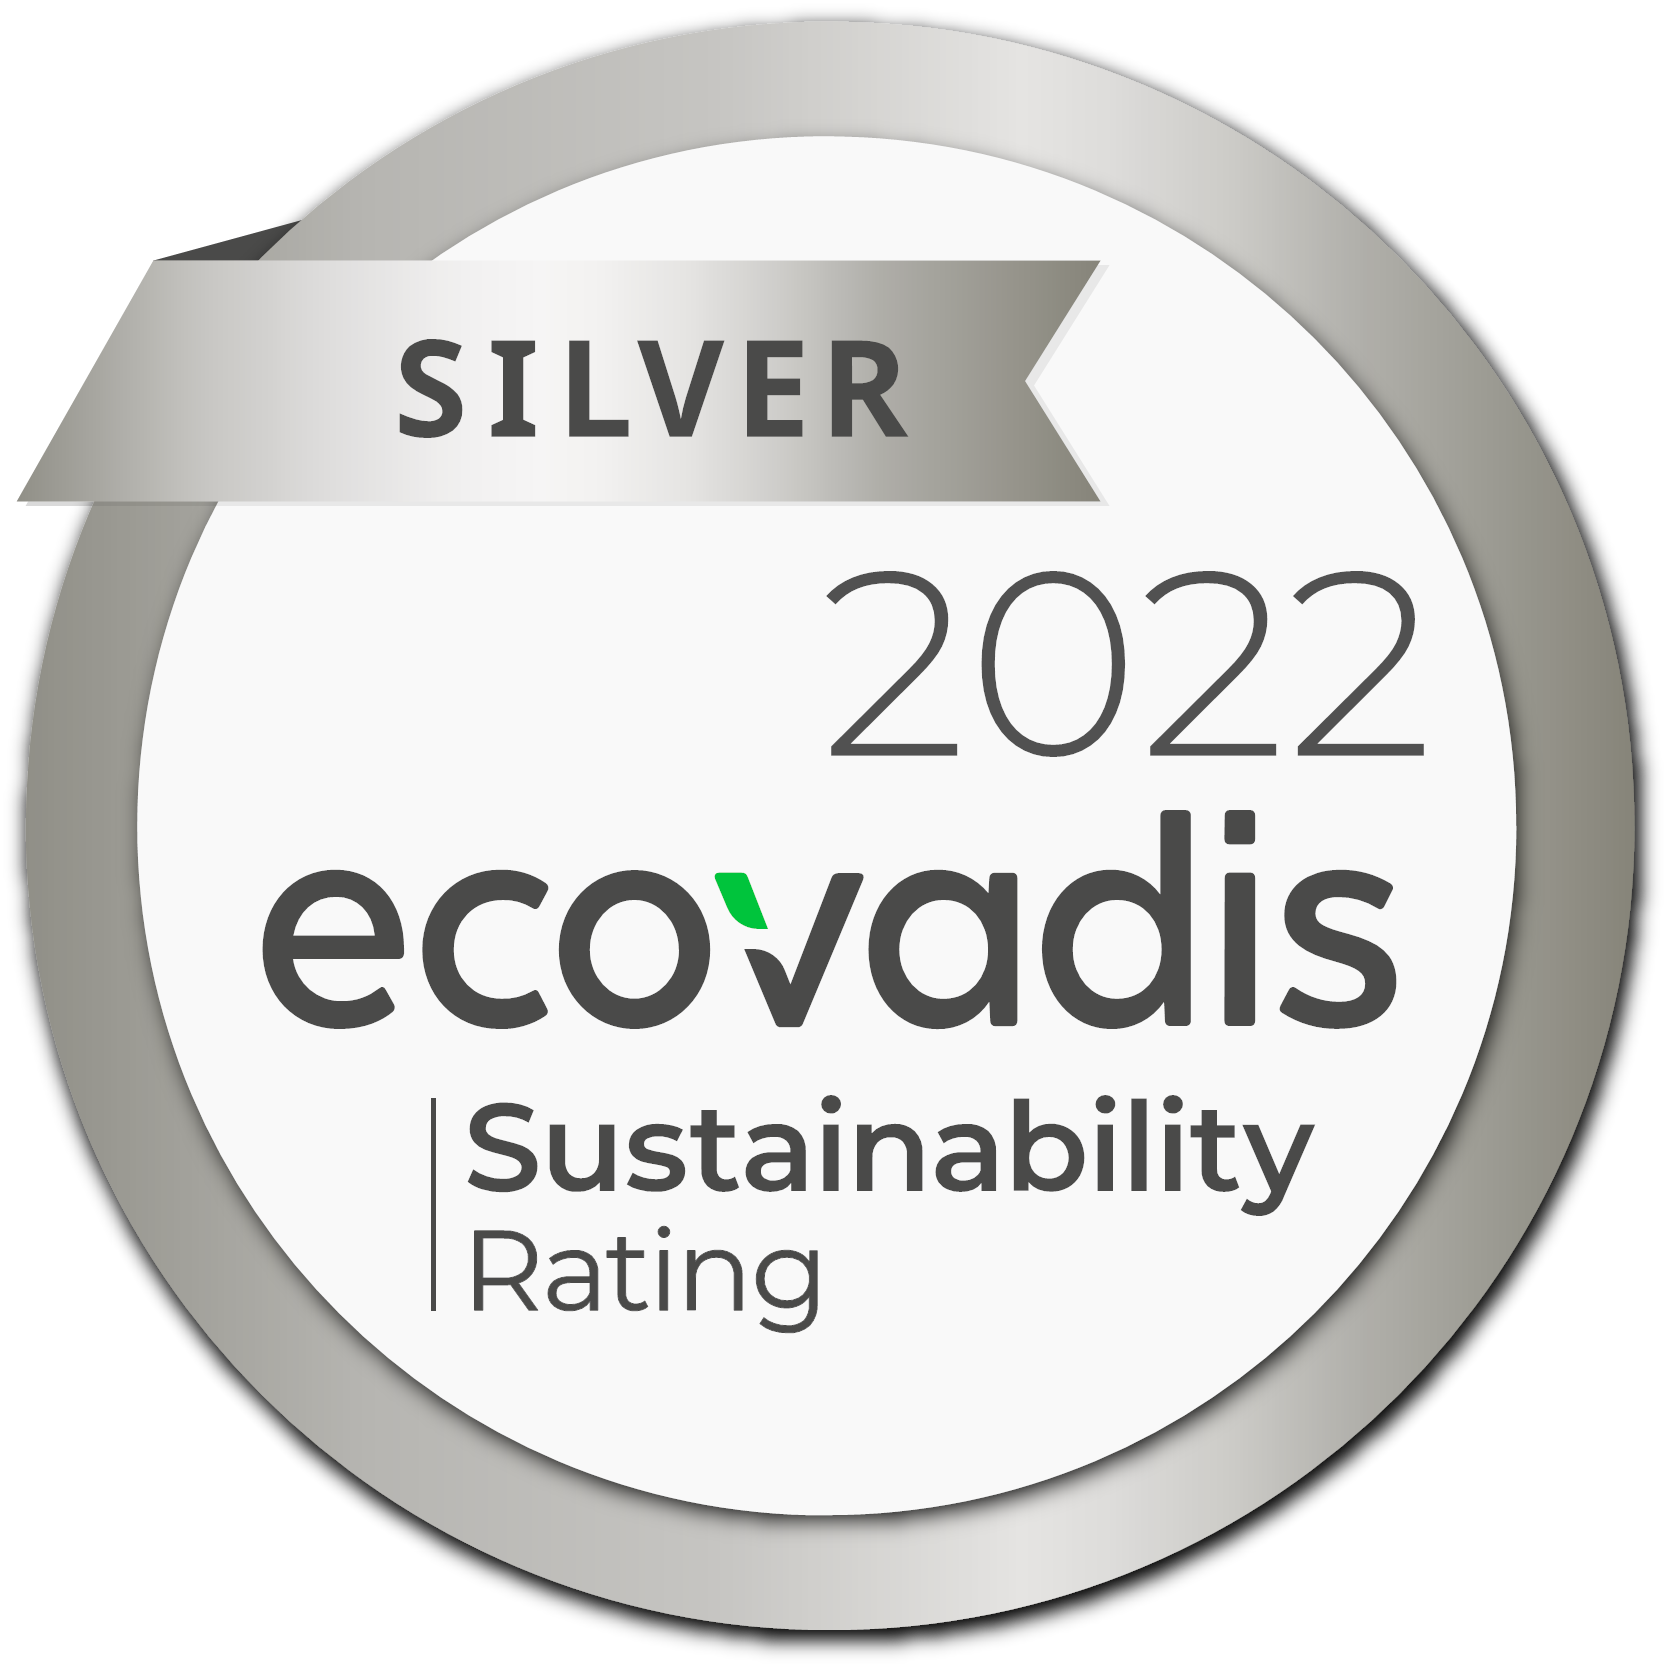 Ecovadis Silver Medal 2022